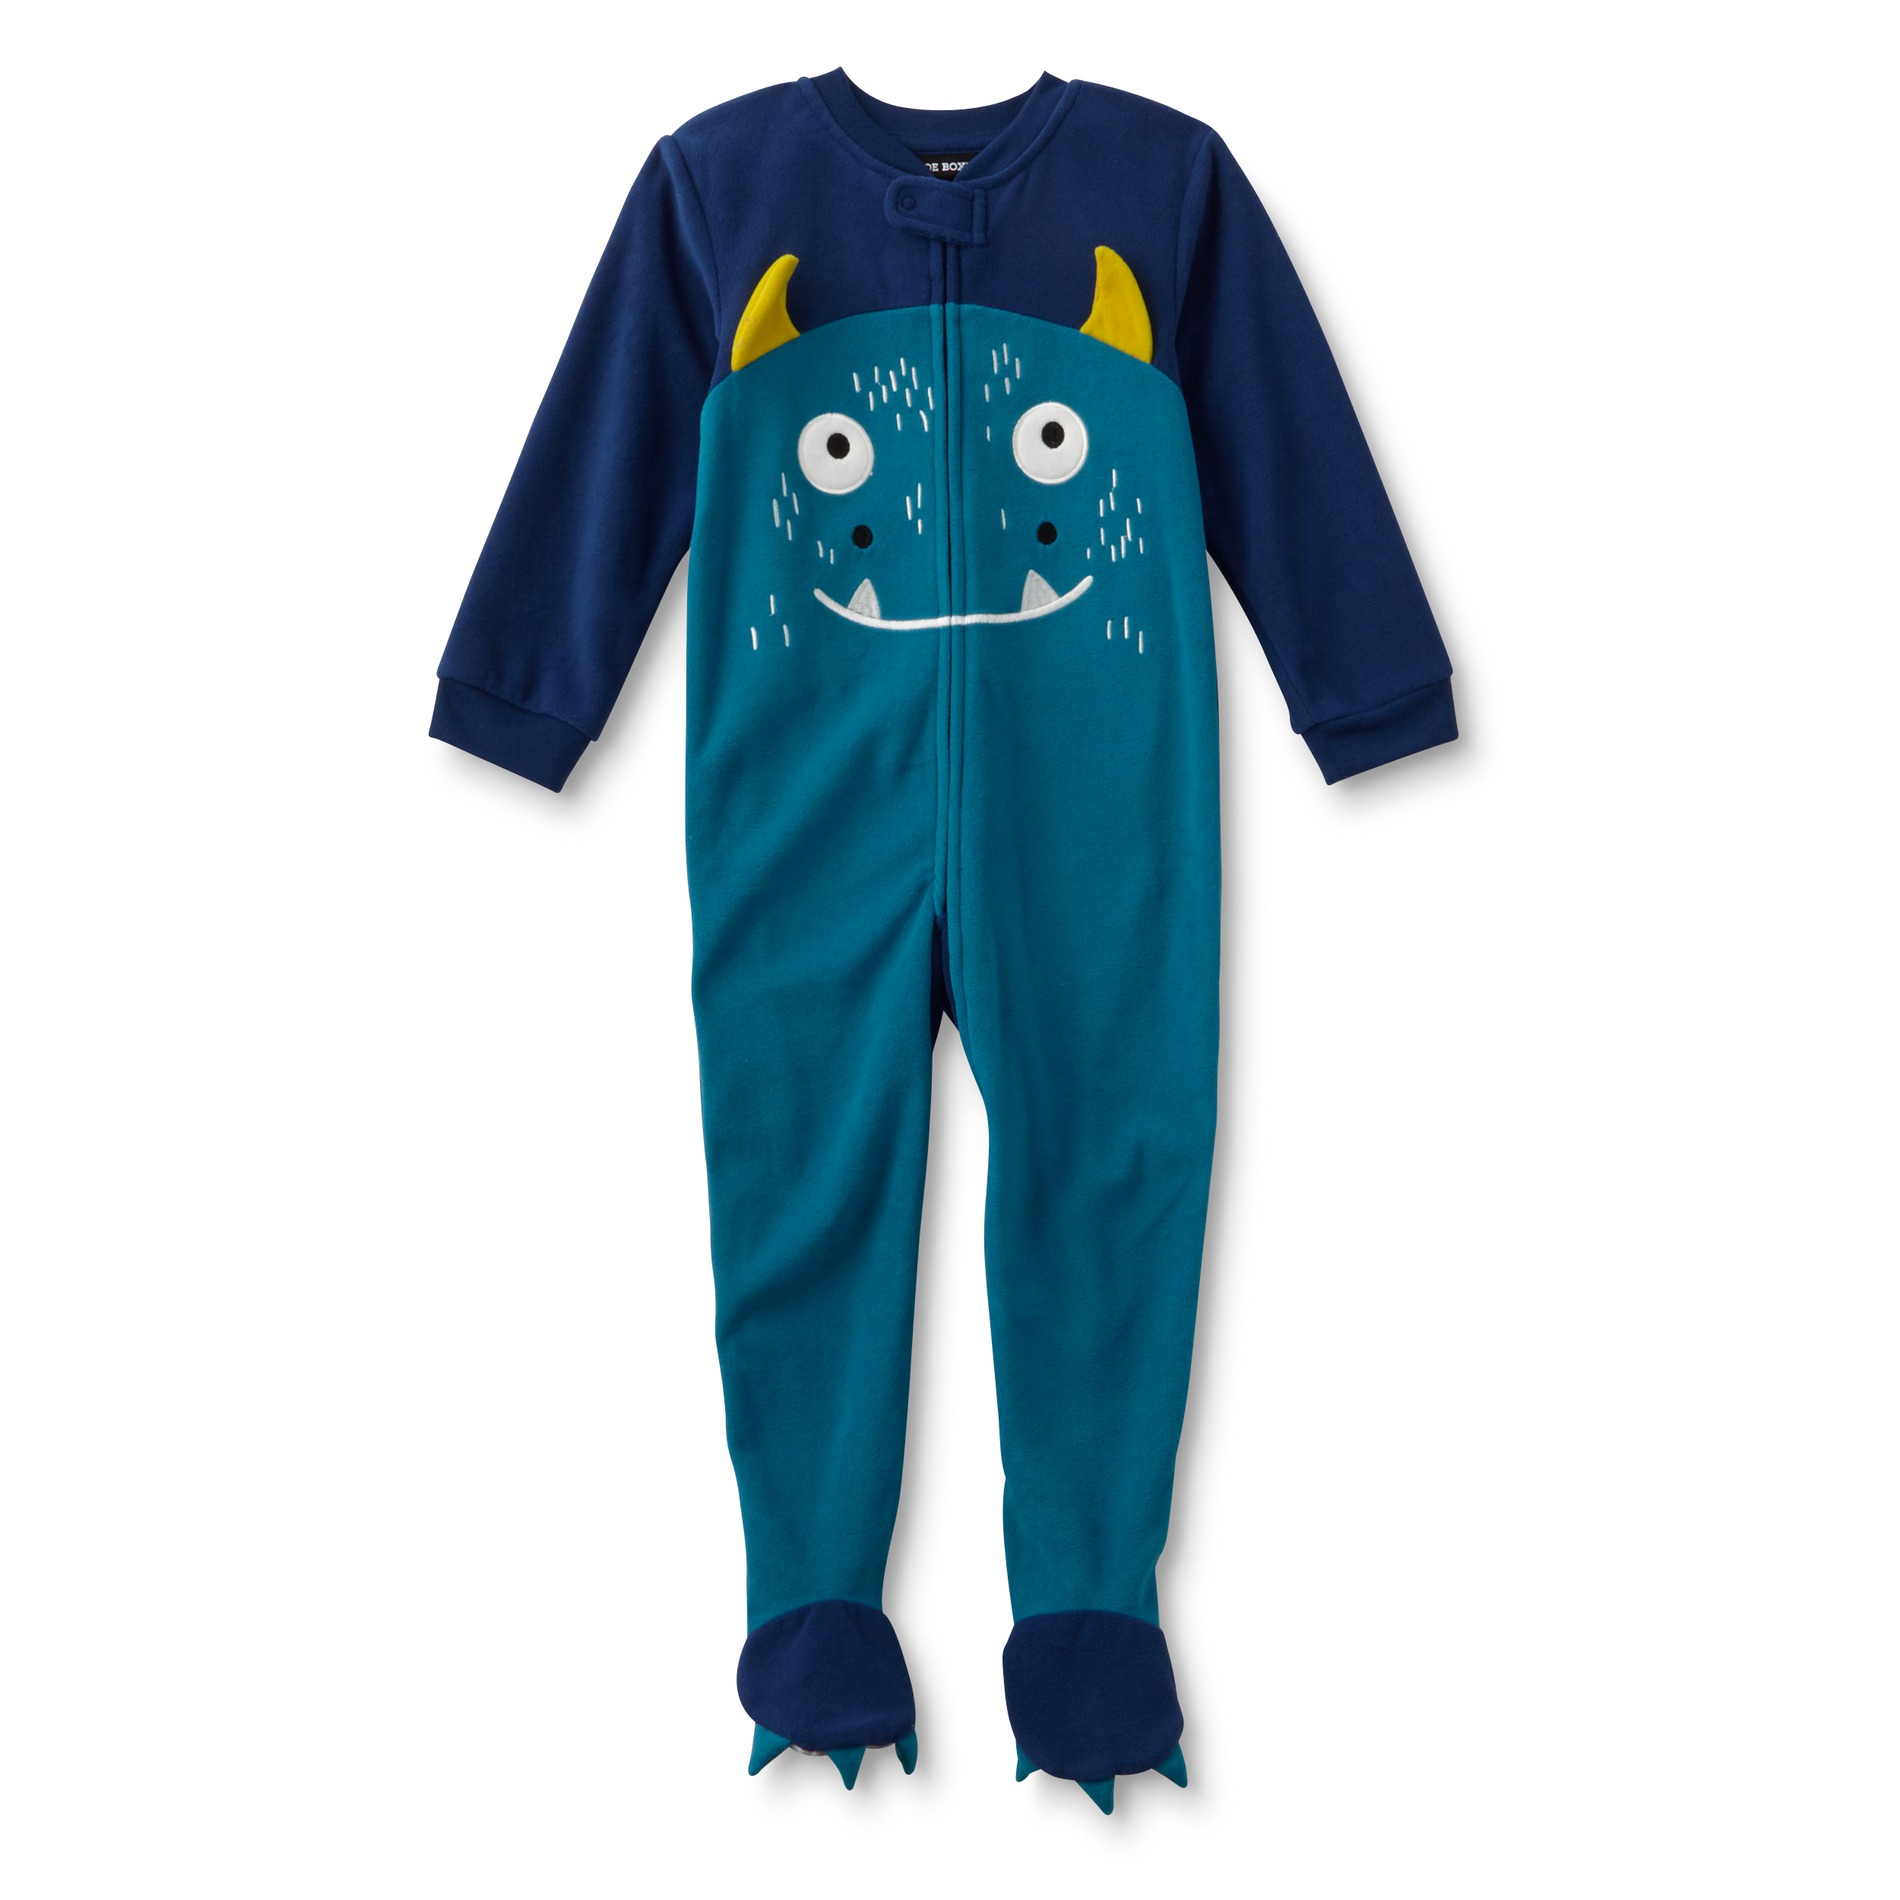 Joe Boxer Infant & Toddler Boy's Sleeper Pajamas - Monster Face